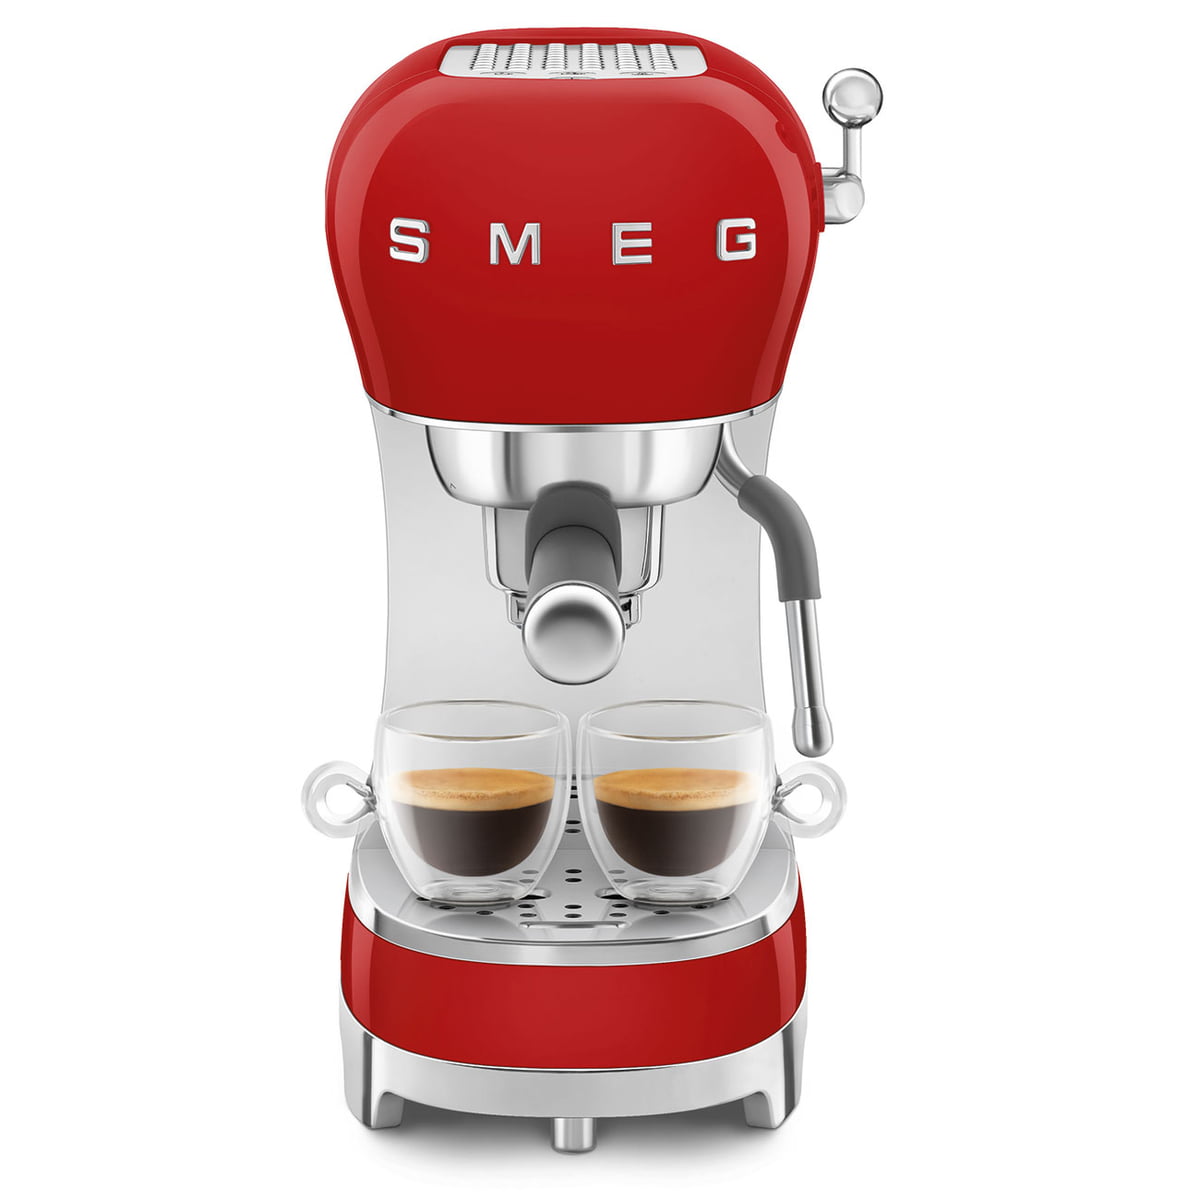 Smeg Coffee Maker - Does Style Match Taste